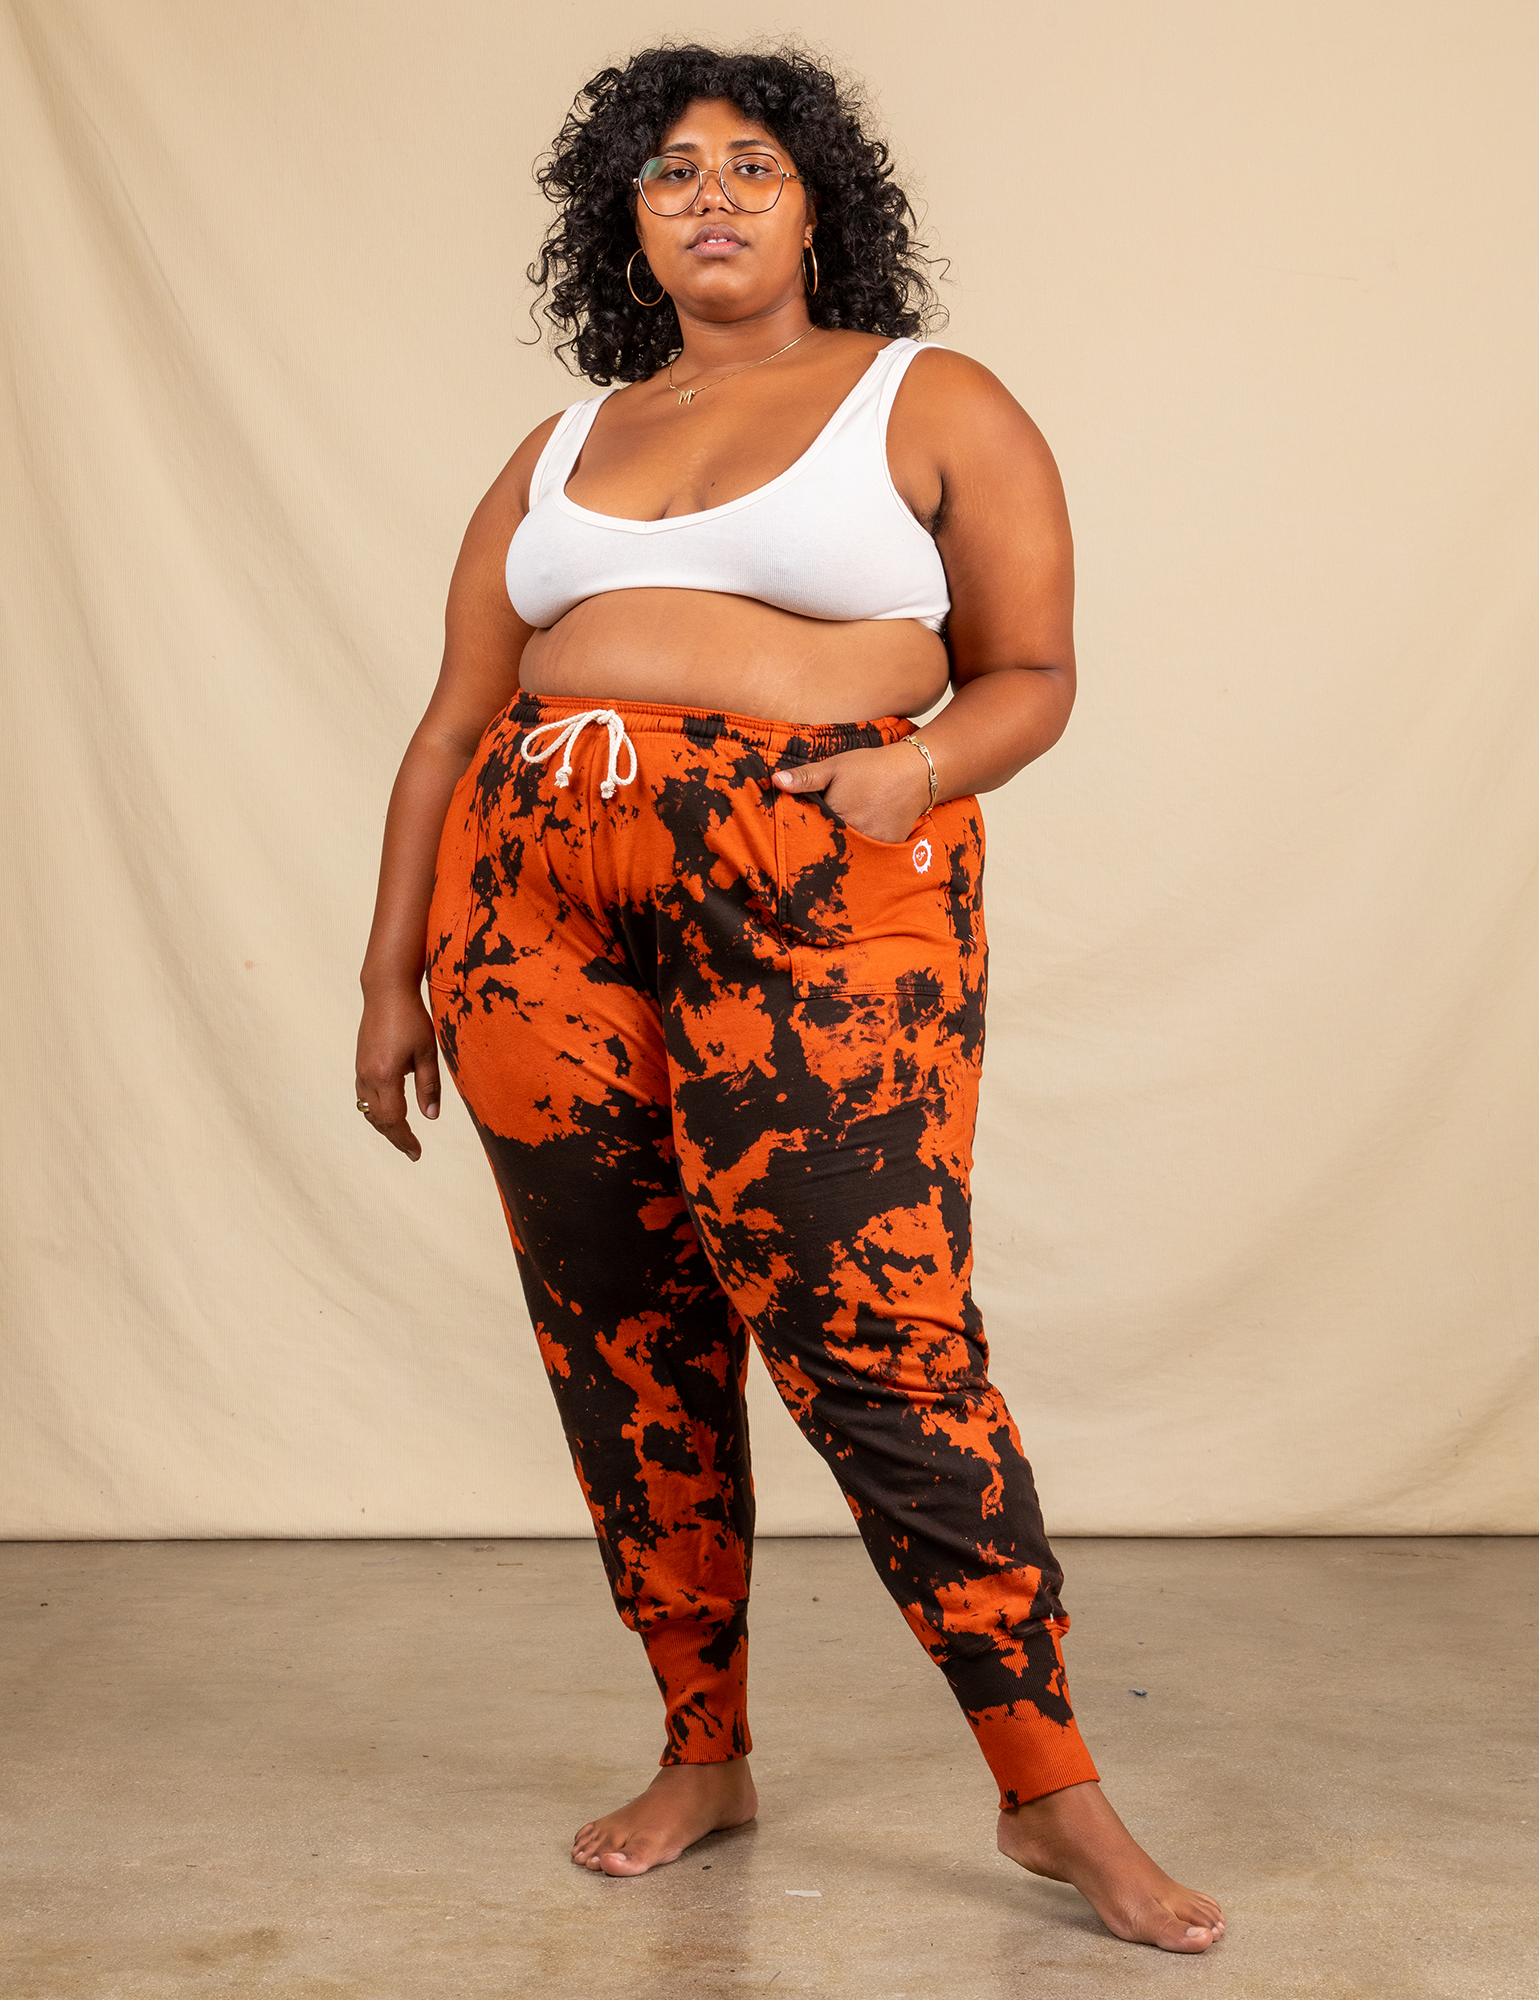 Model wearing orange and black sweatpants